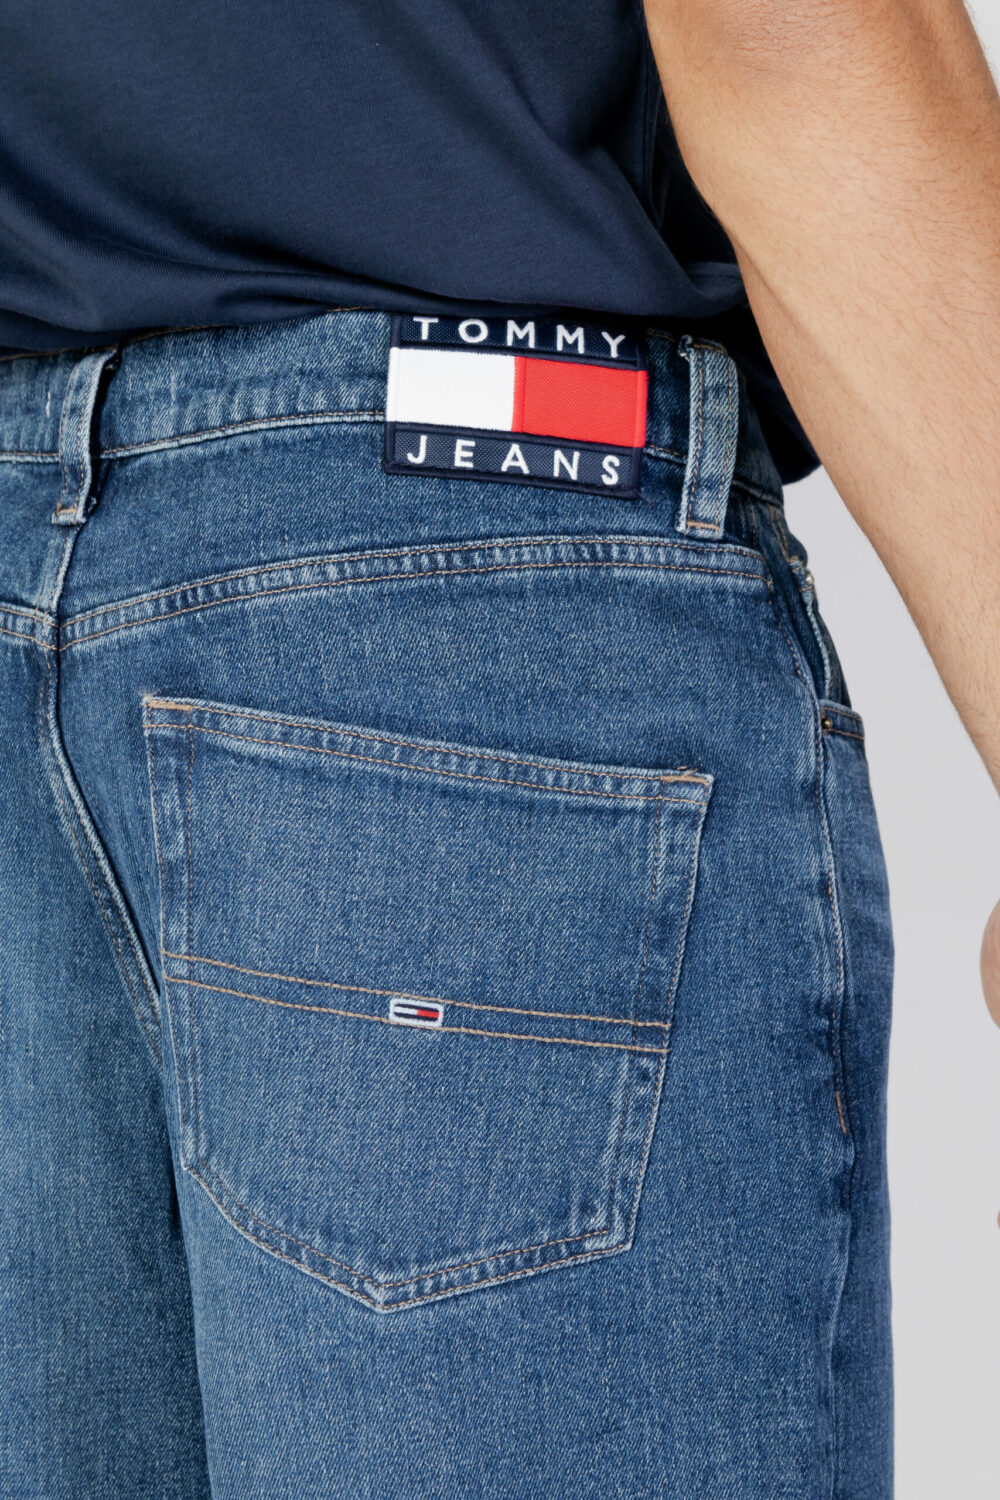 Jeans Tommy Hilfiger Jeans Denim - Foto 2